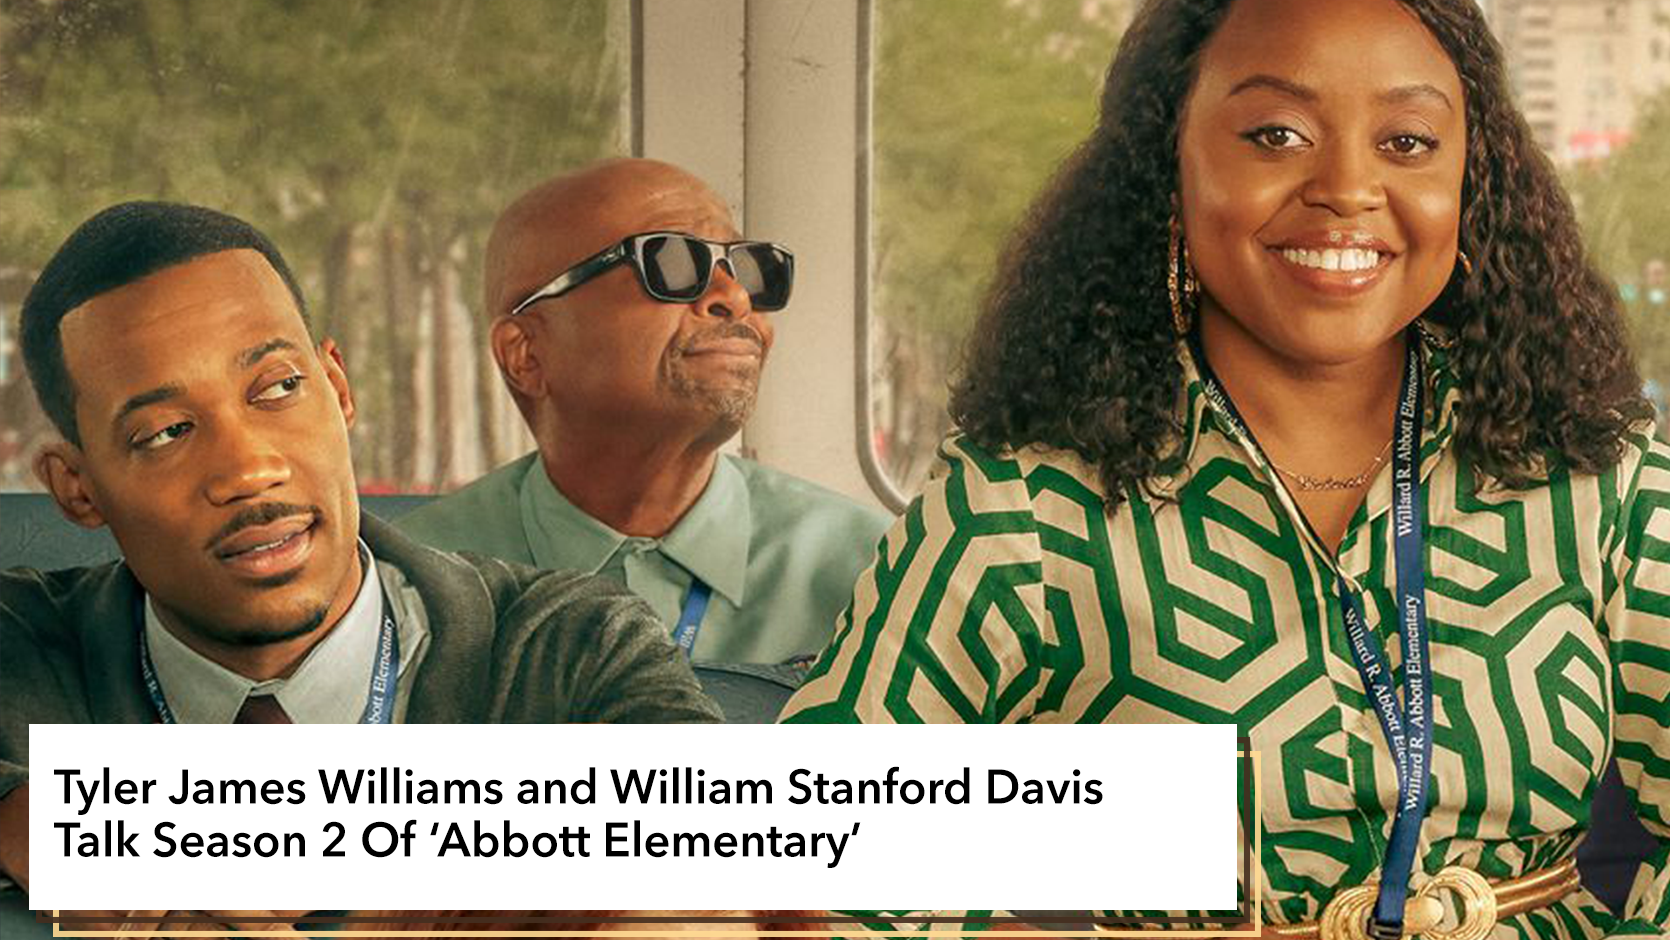 Interview: Tyler James Williams And William Stanford Davis Talk Season 2 Of ‘Abbott Elementary’